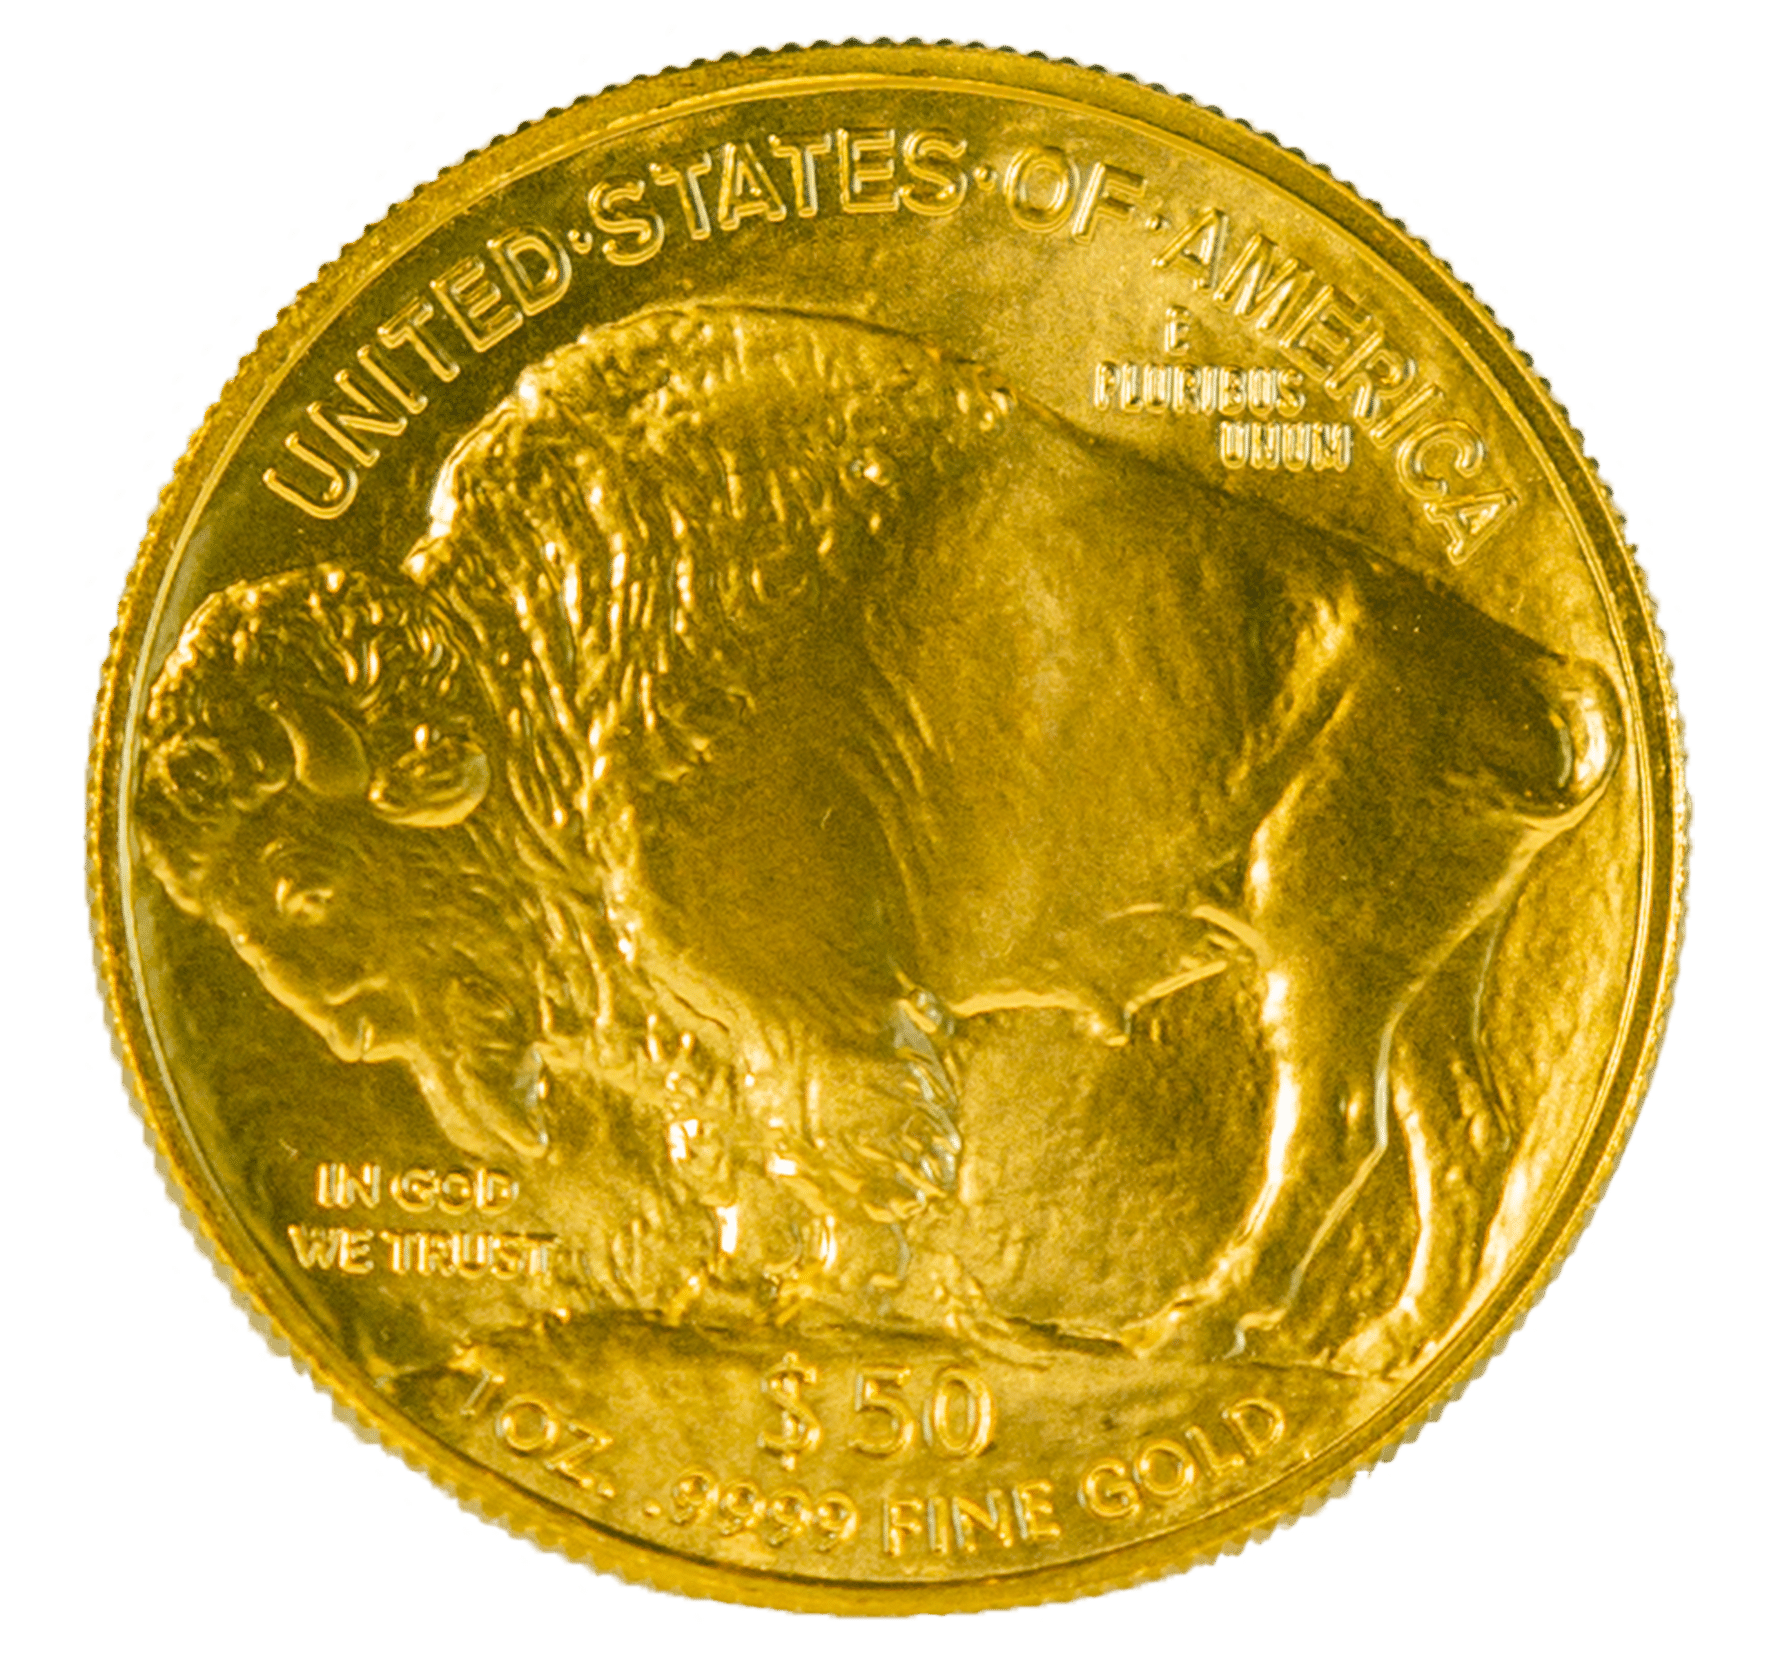 1-ounce Gold Buffalo coin resting on a reflective surface.